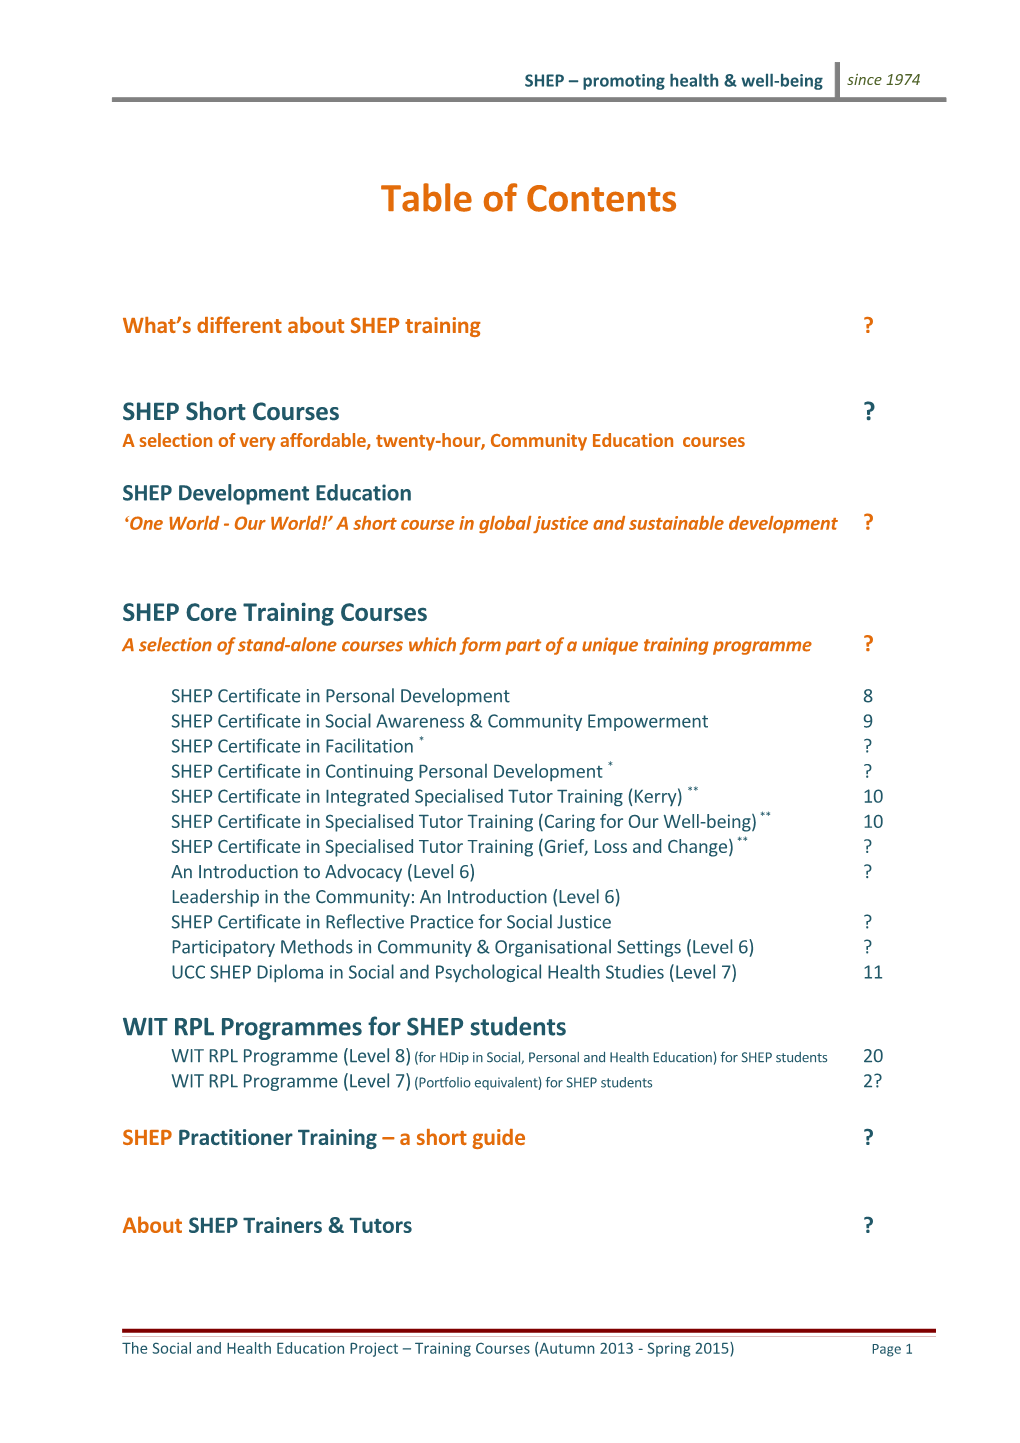 SHEP Core Training Programme